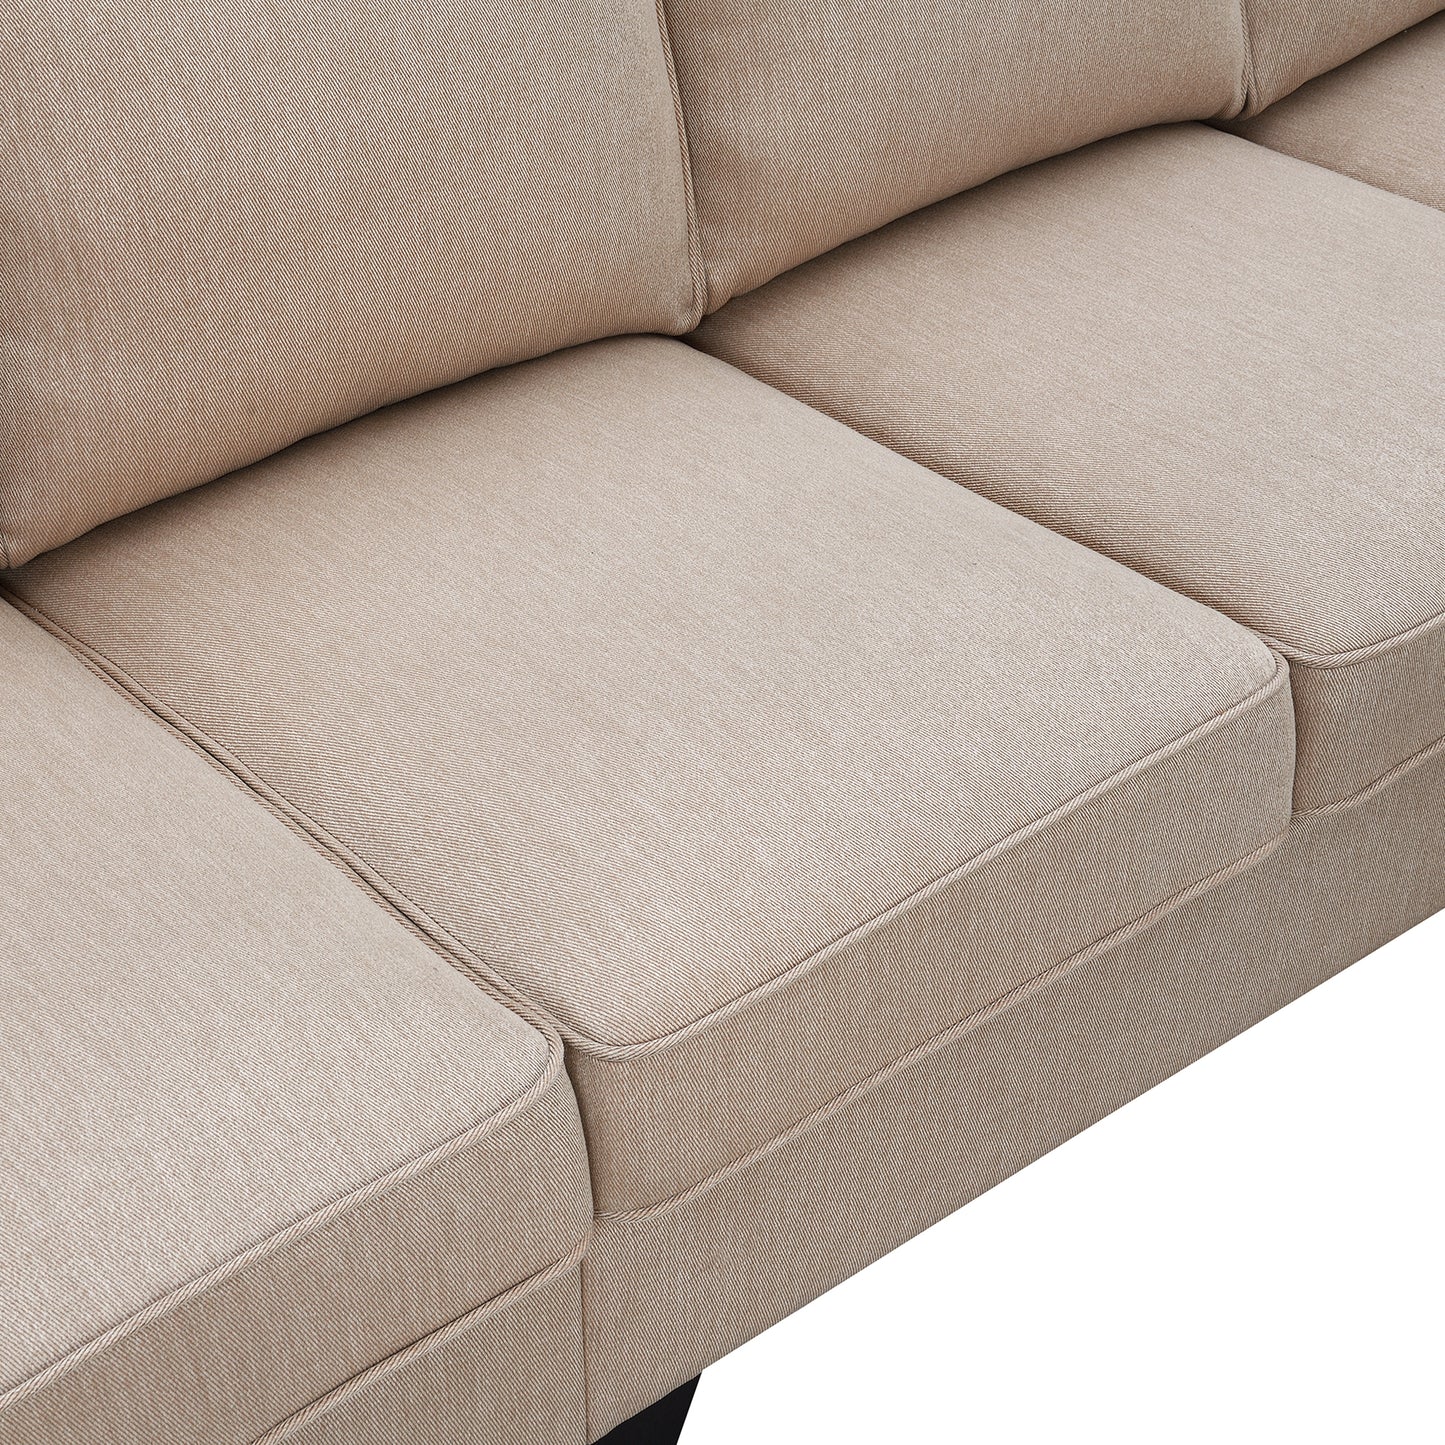 Sectional Sofa: 7-Seat Set, Chaise Lounge, Convertible Ottoman